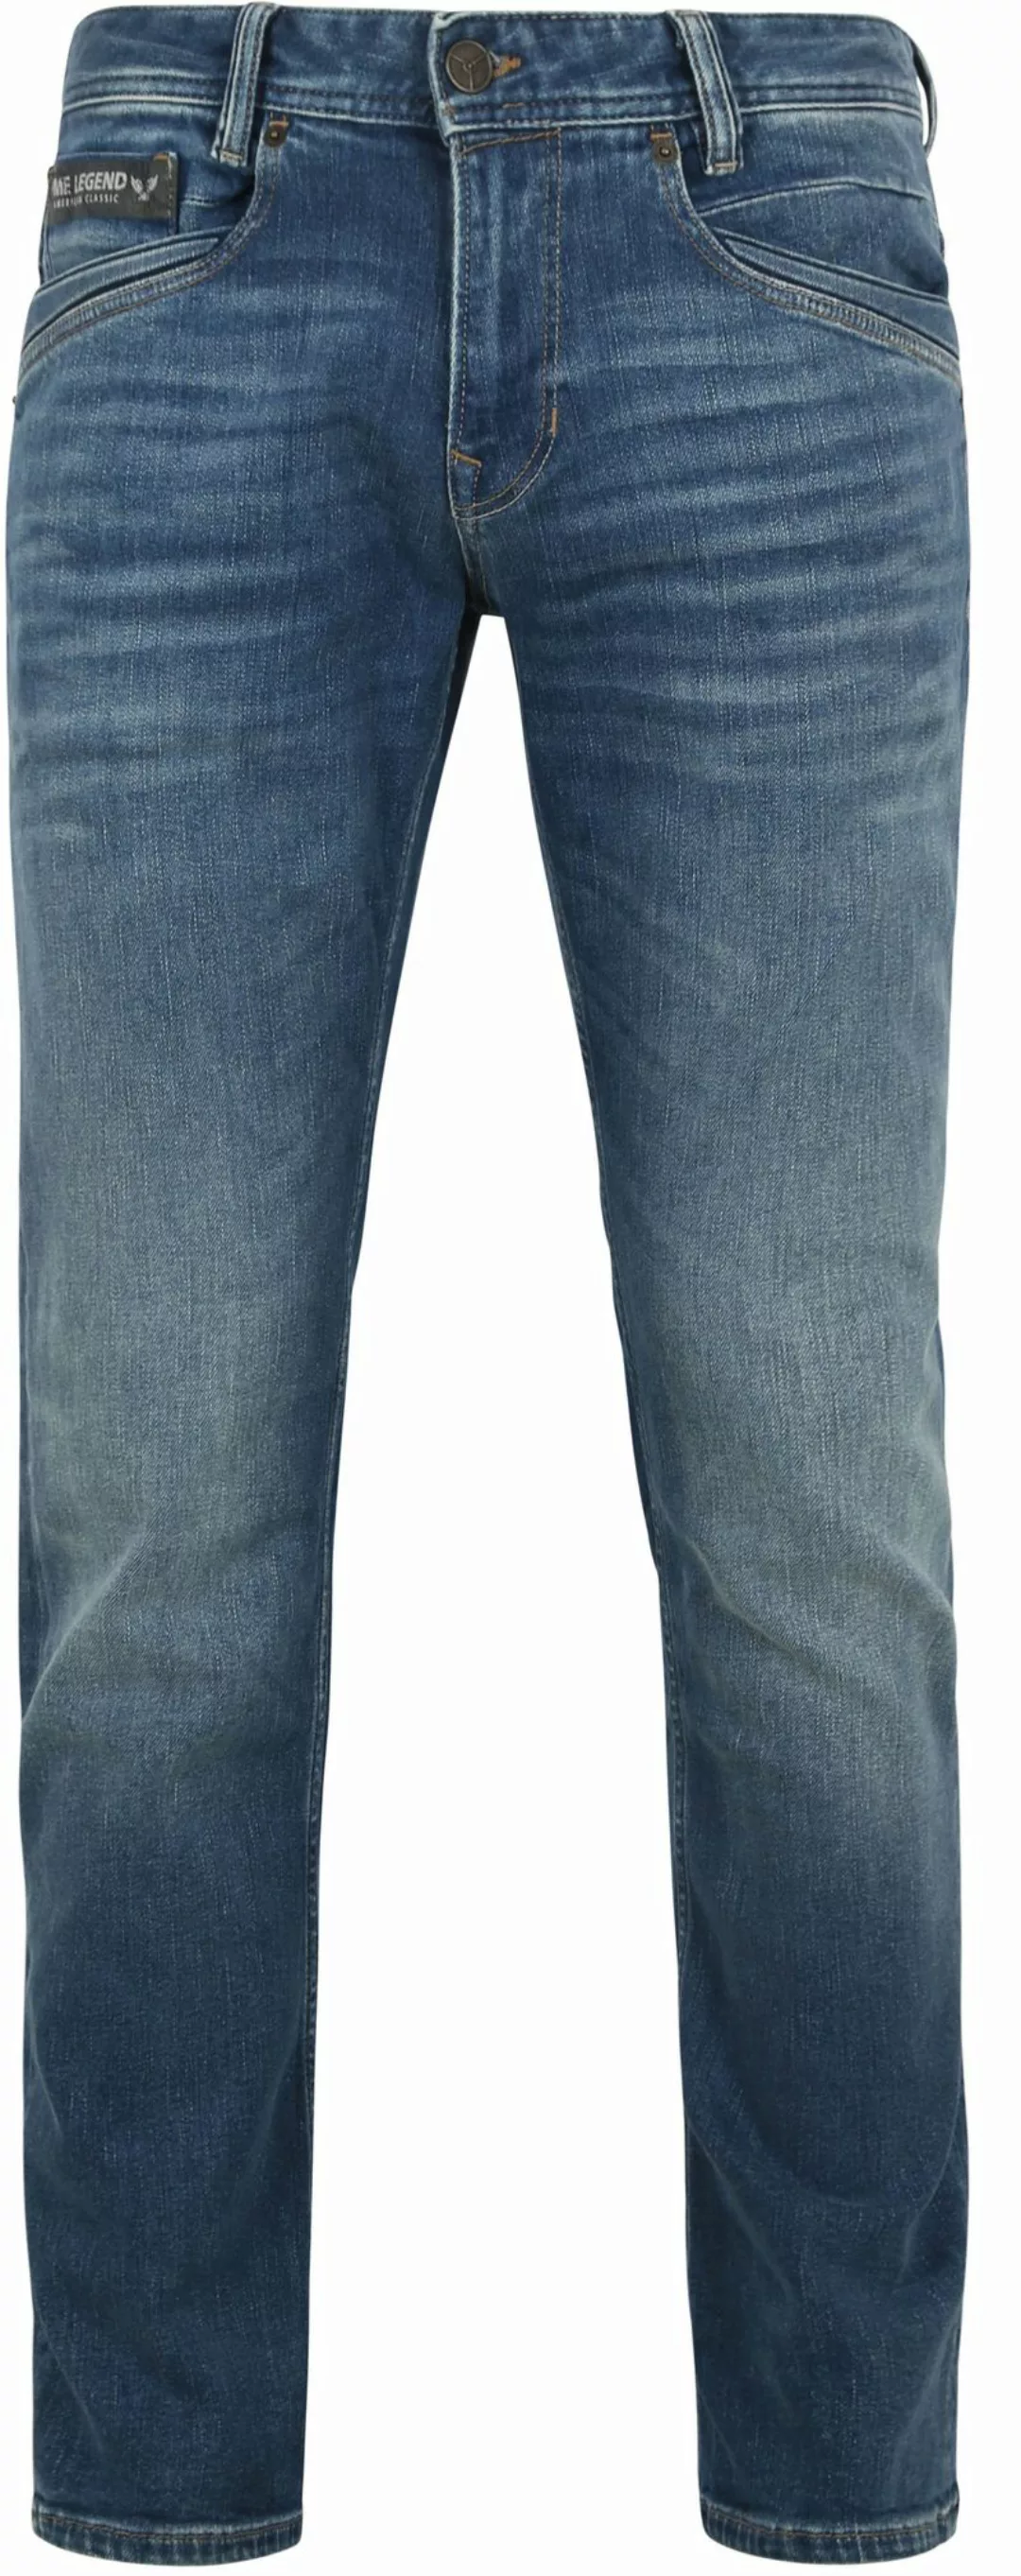 PME Legend Skyrak Jeans Blau HMB - Größe W 36 - L 30 günstig online kaufen